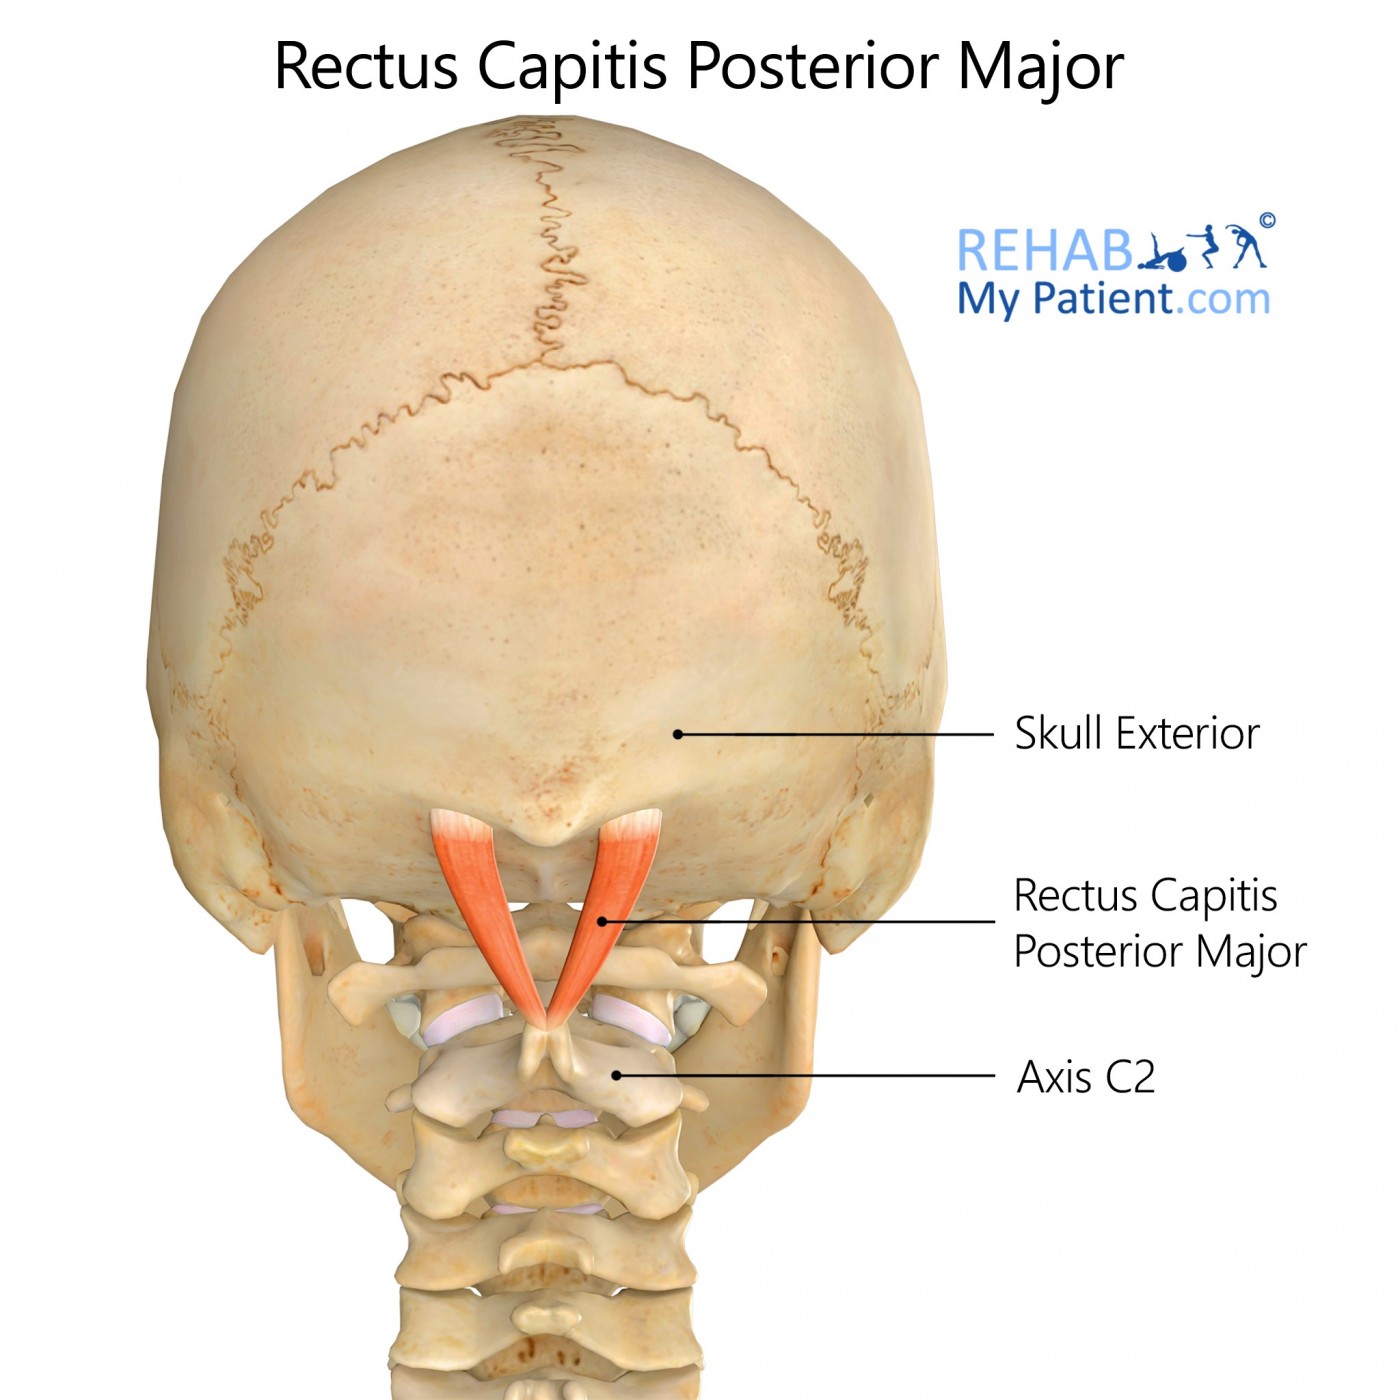 Rectus Capitis Posterior Major